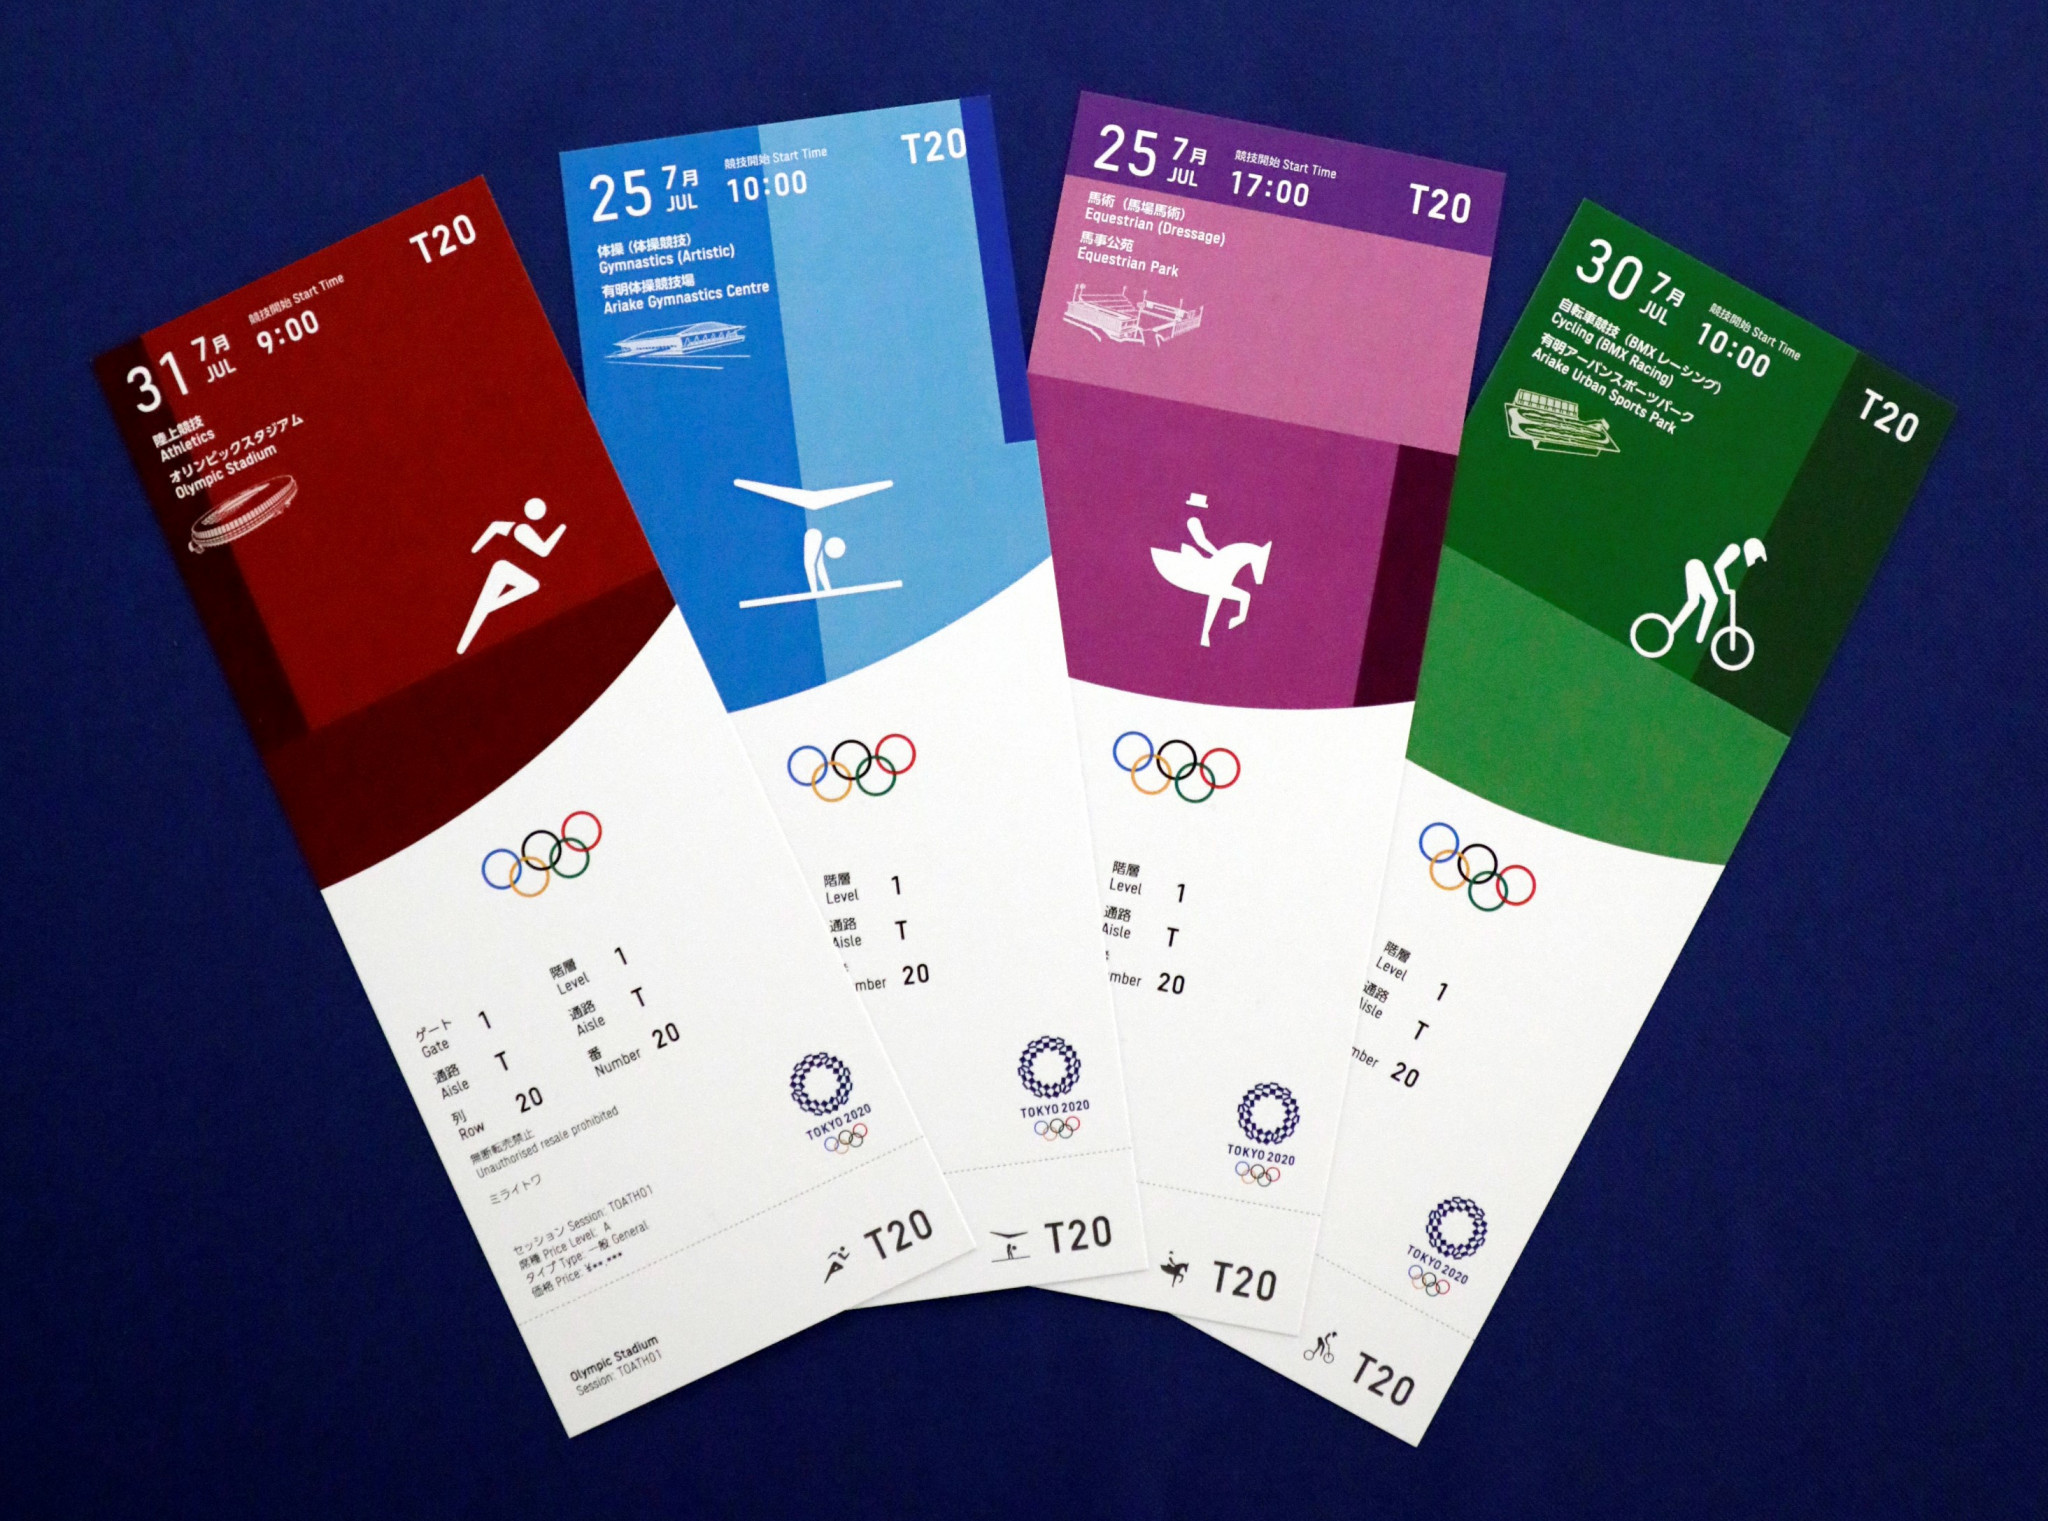 Around 4.48 million tickets were sold for the Olympic Games, while 970,000 were sold for the Paralympics ©Tokyo 2020